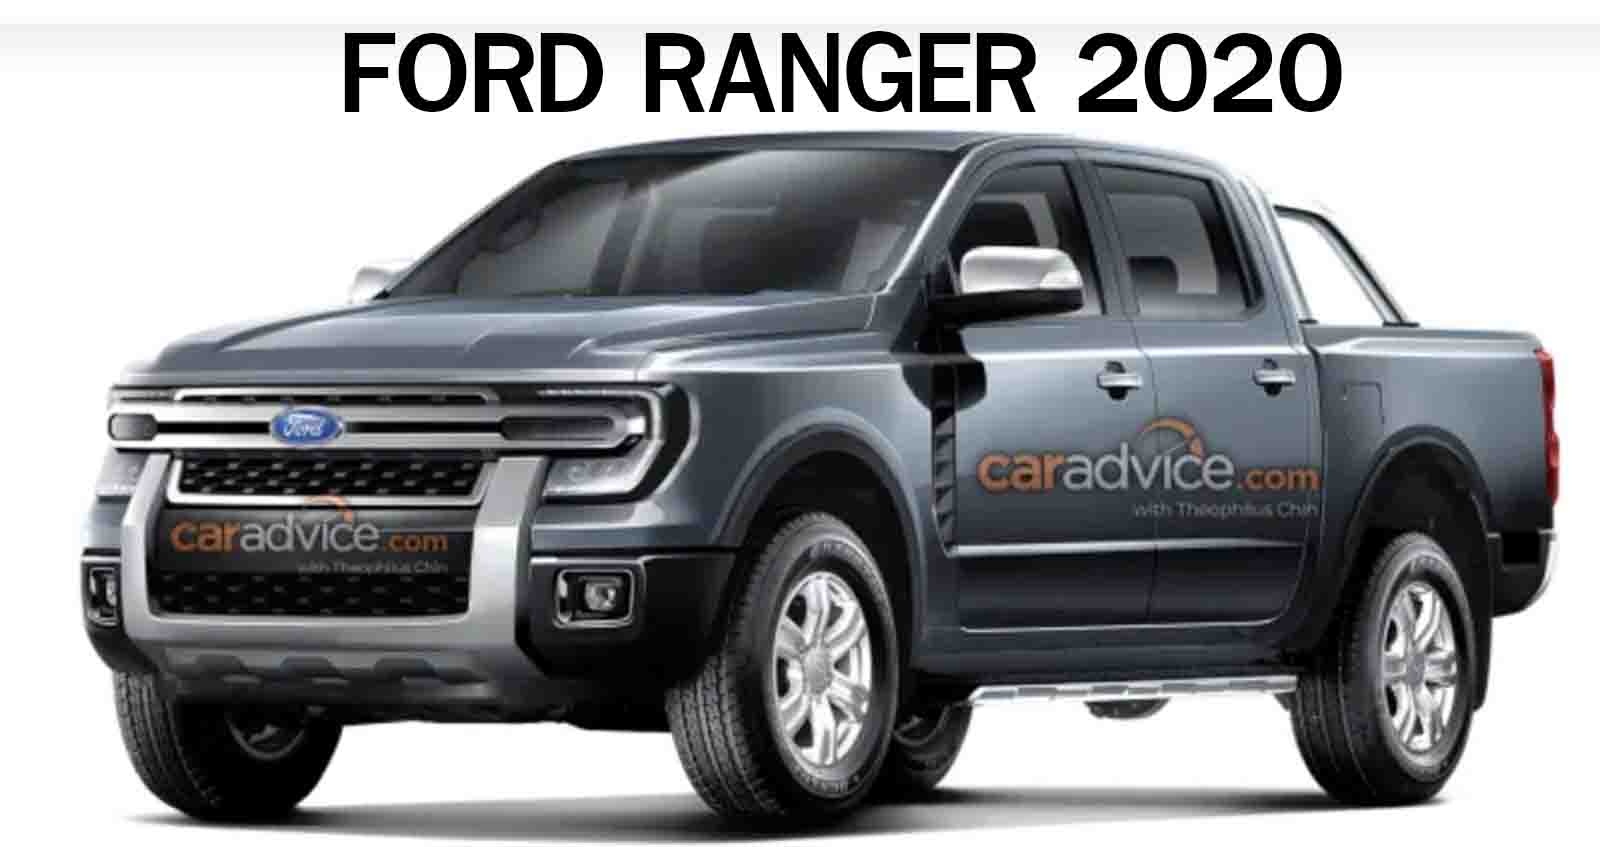 New Ford Ranger เจนใหม่ ภาพเรนเดอร์ล่าสุด ใกล้เคียงคันจริง